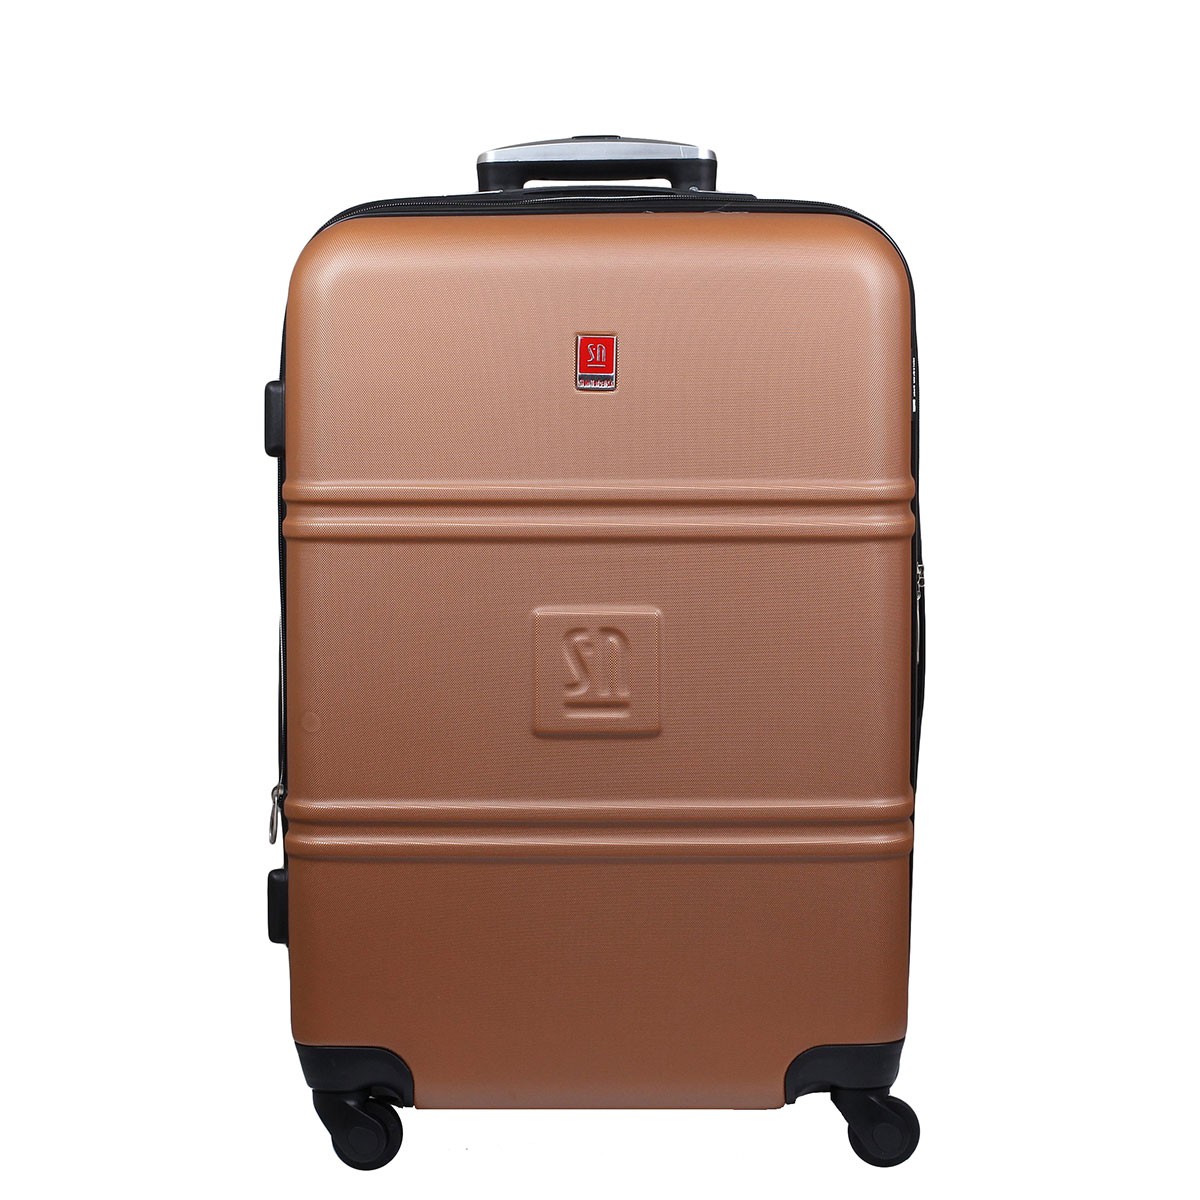 bezowa-walizka-srednia-ABS-04-0411O-15.jpg